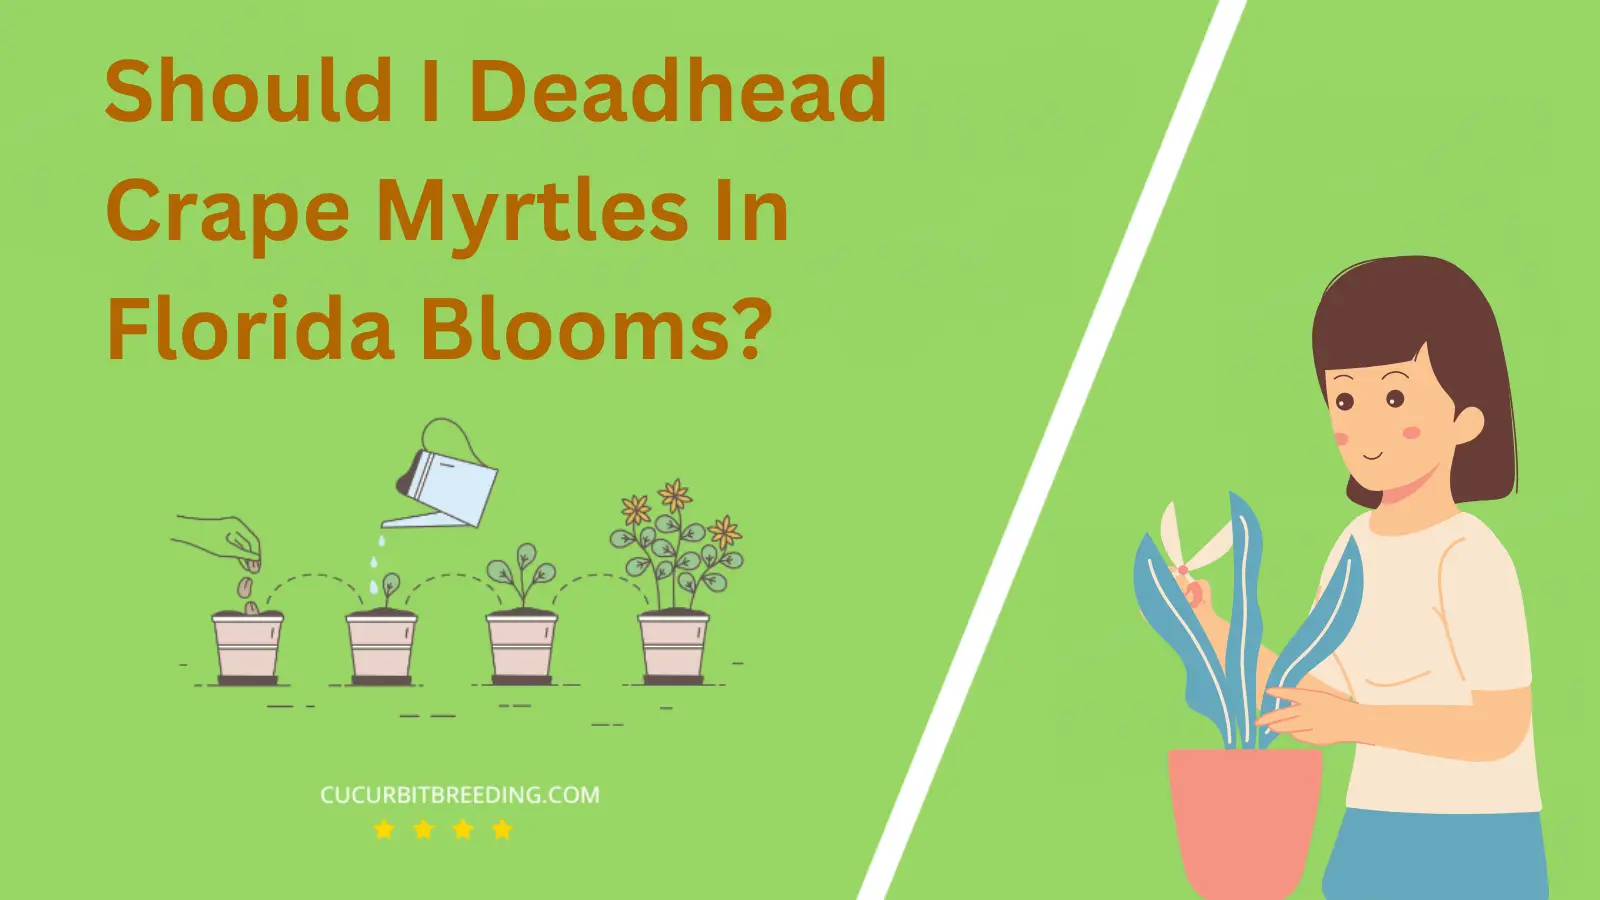 Should I Deadhead Crape Myrtles In Florida Blooms?